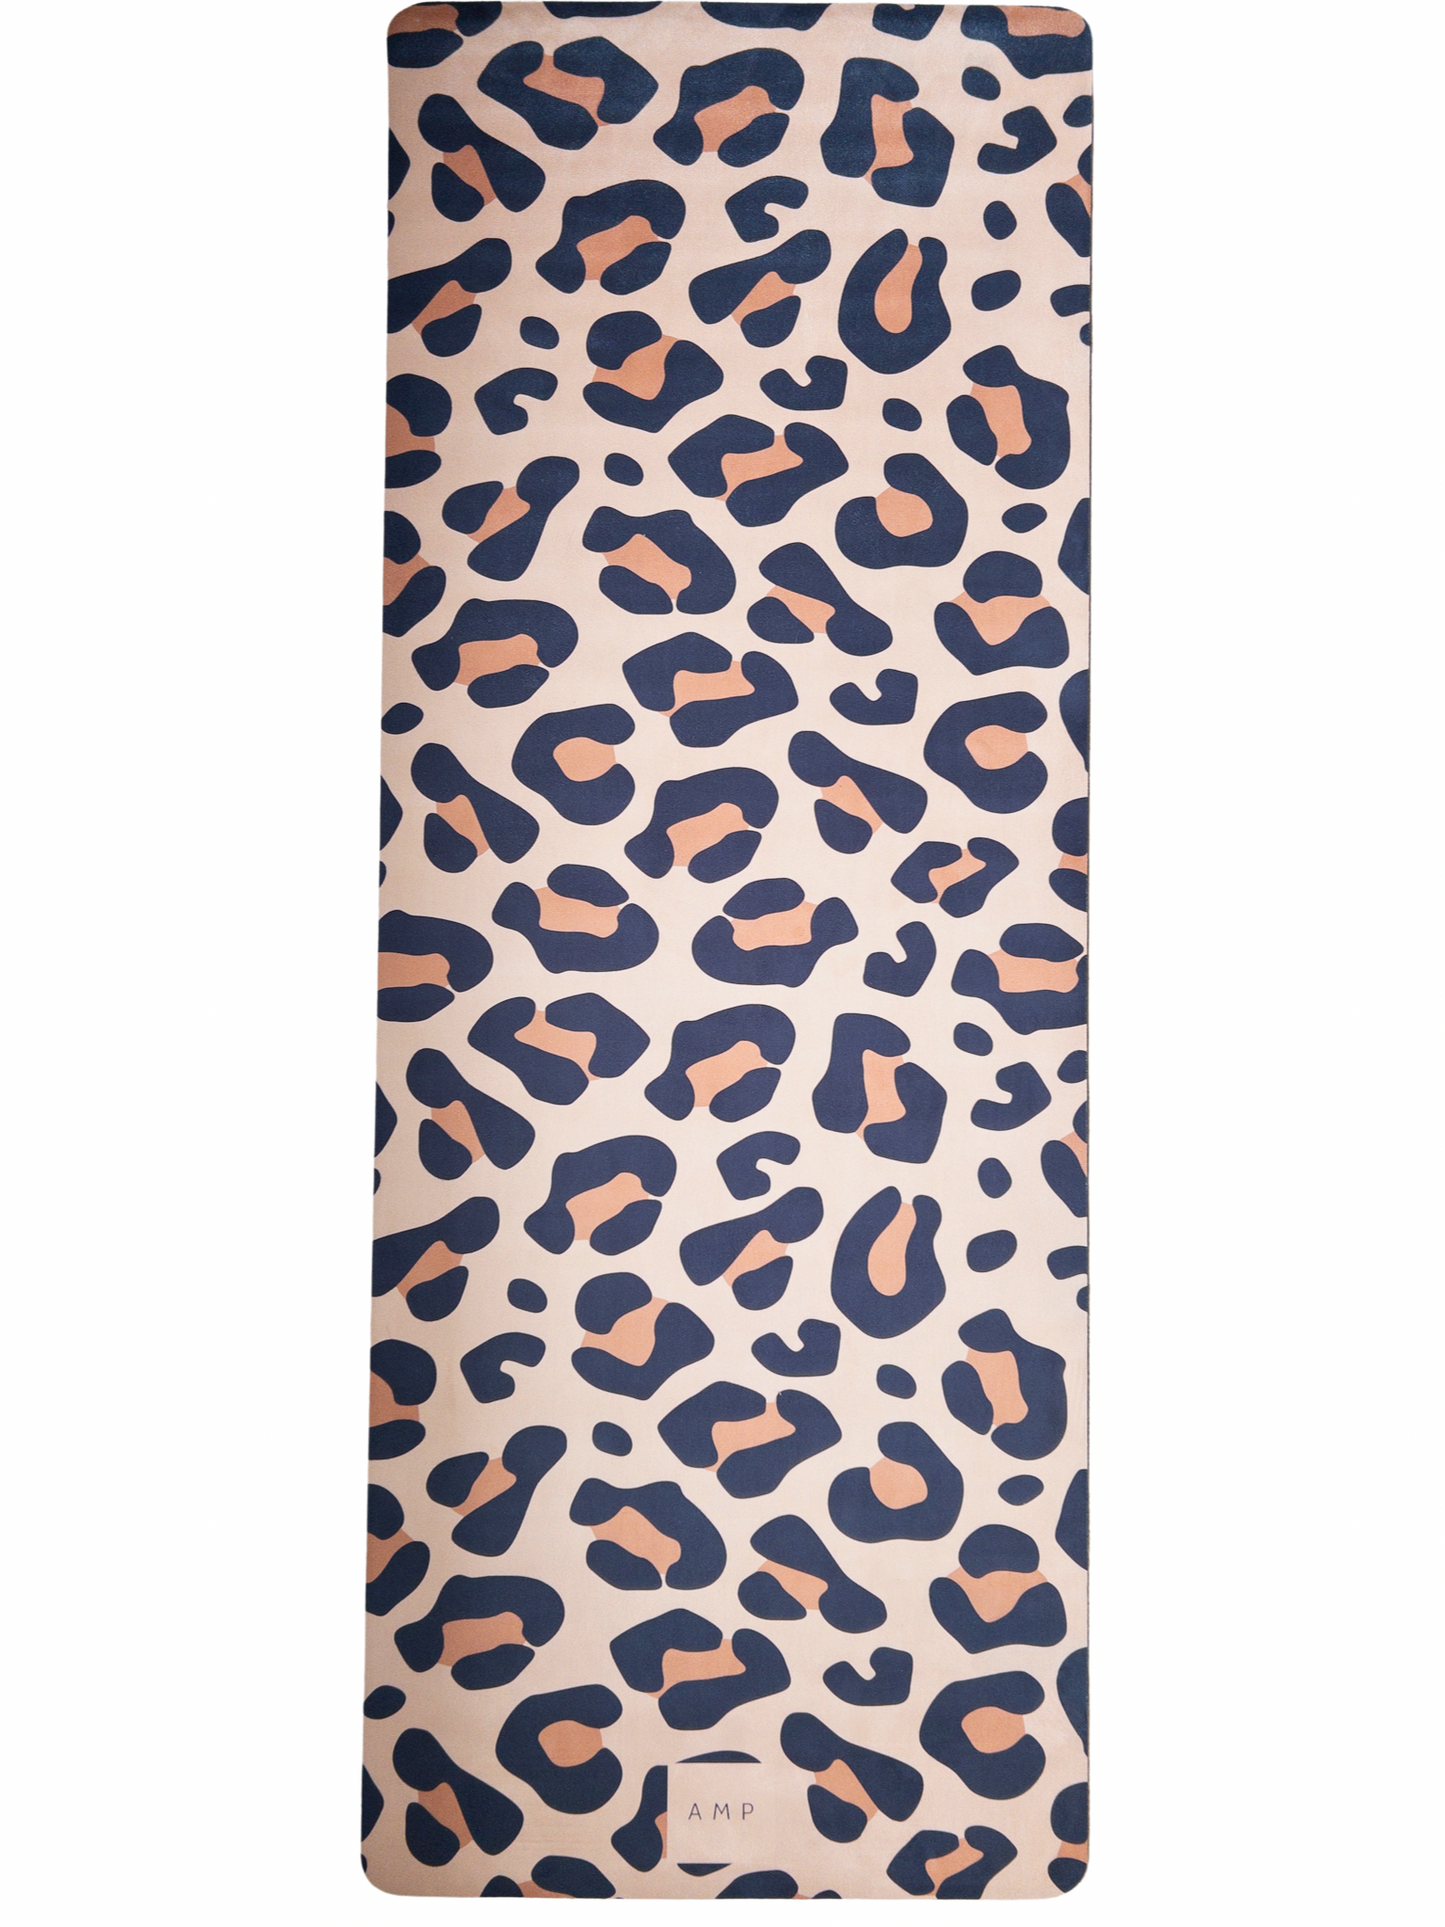 Amp natural leopard towel yoga Pilates fitness mat 